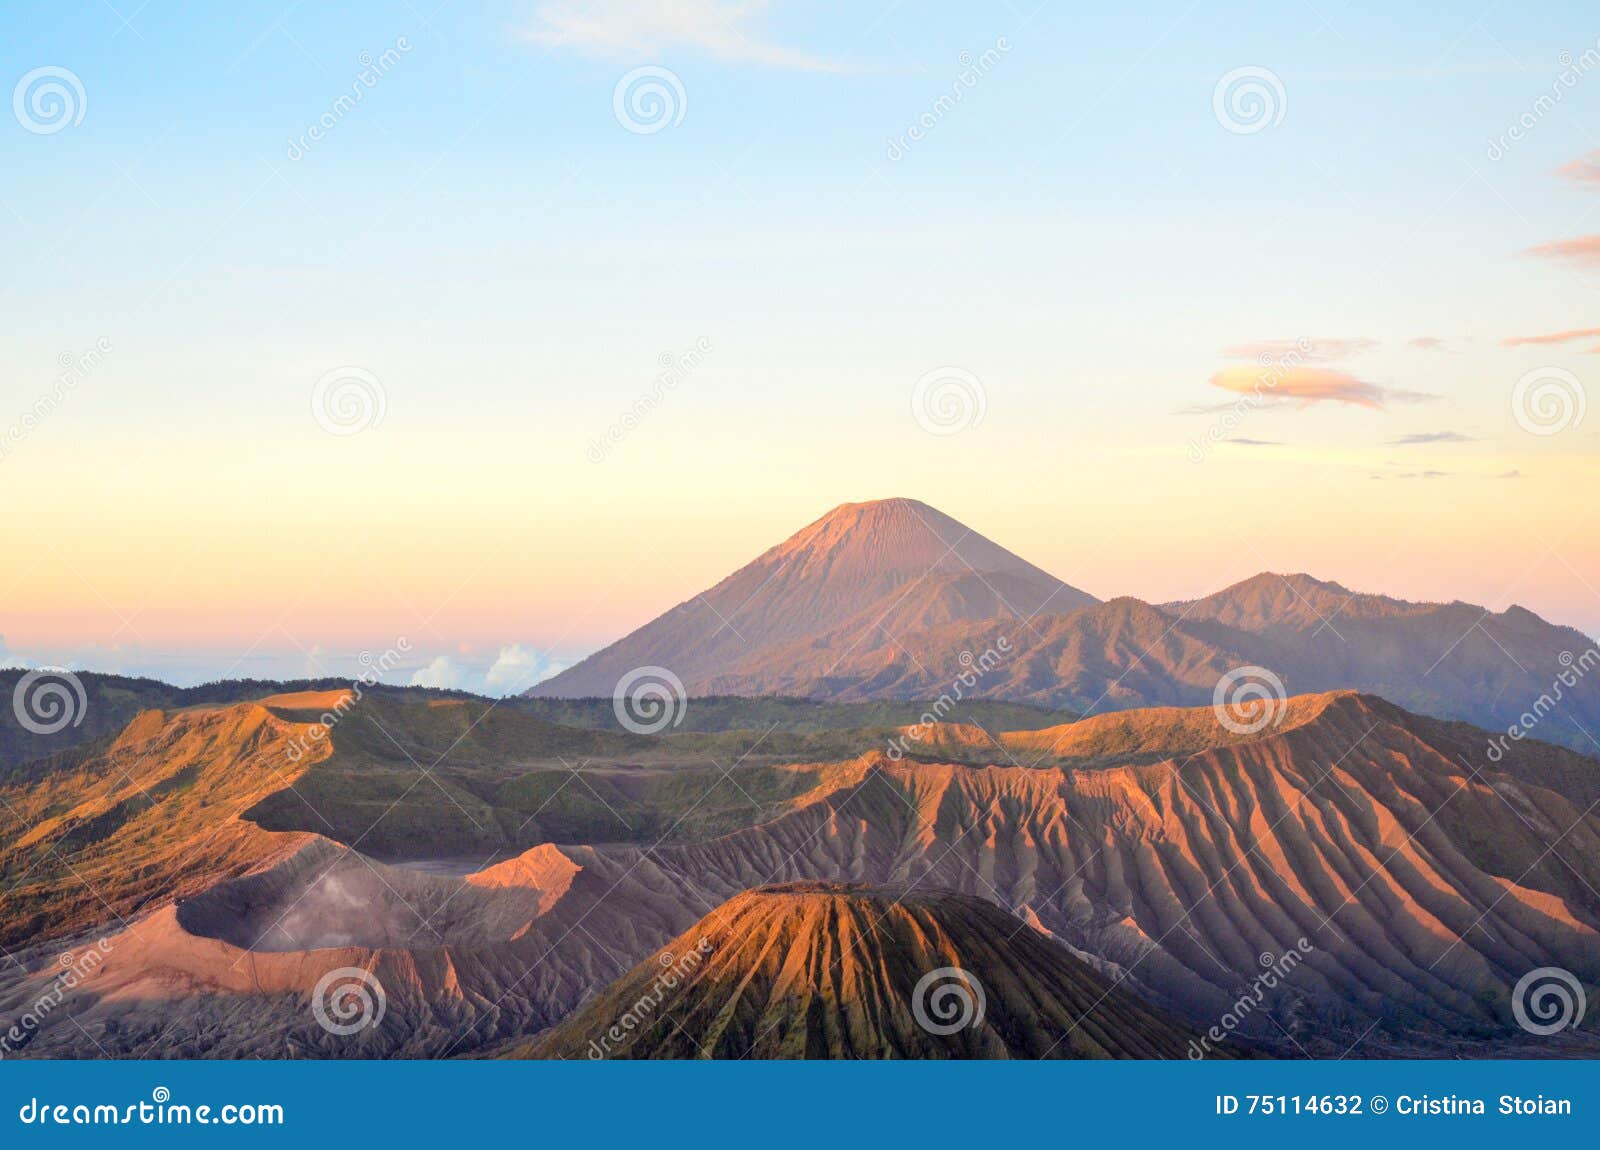 Sunrise at Mount Bromo stock photo. Image of mount, volcano - 75114632